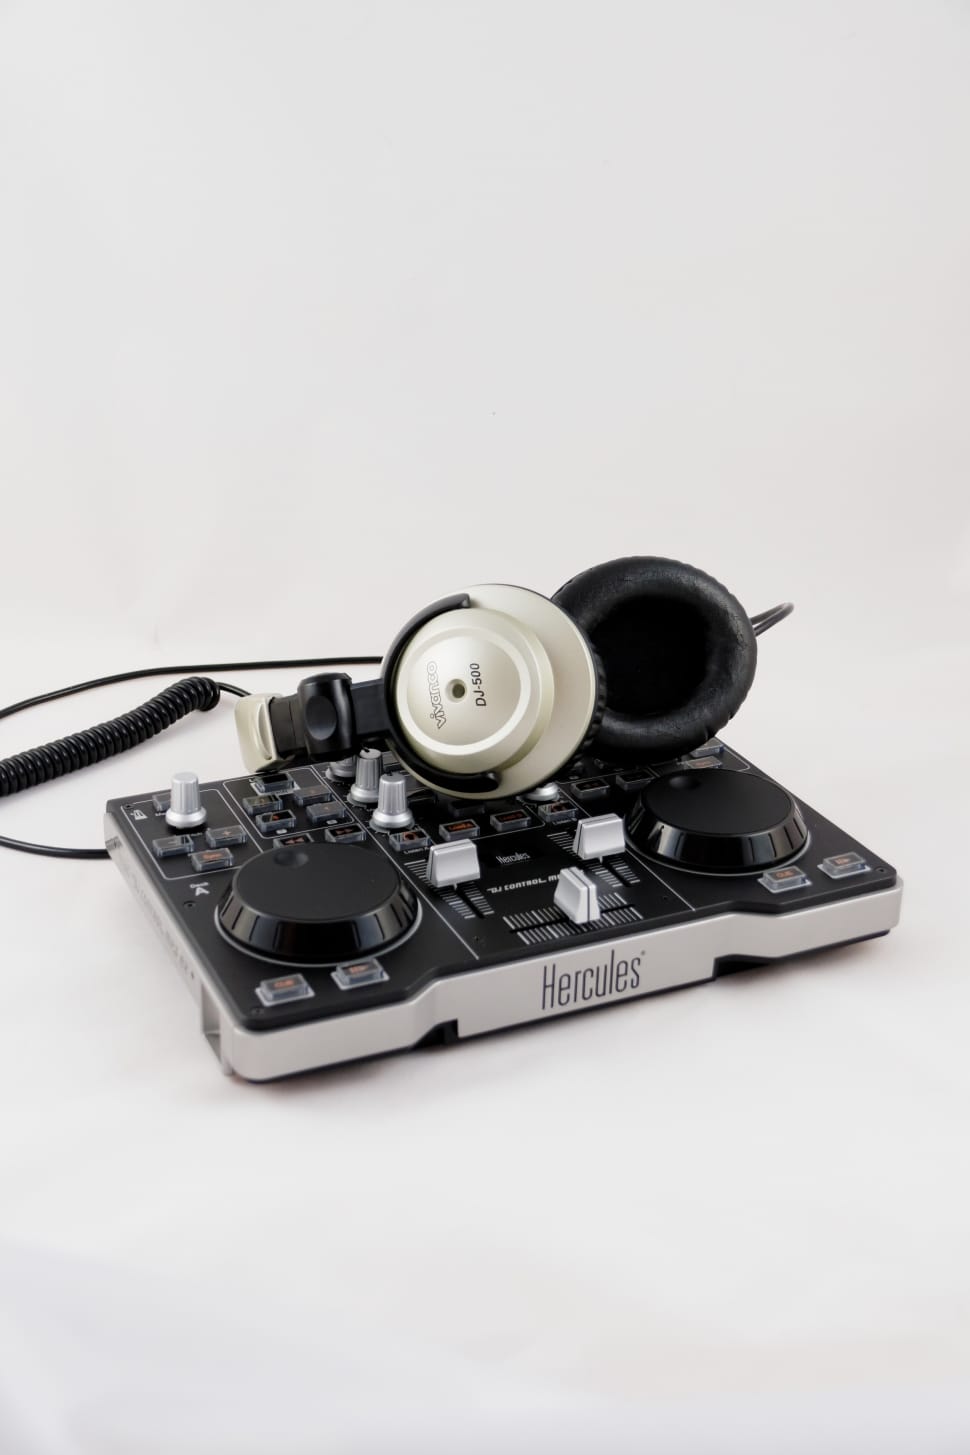 black and gray hercules dj conroller, gray headphones preview